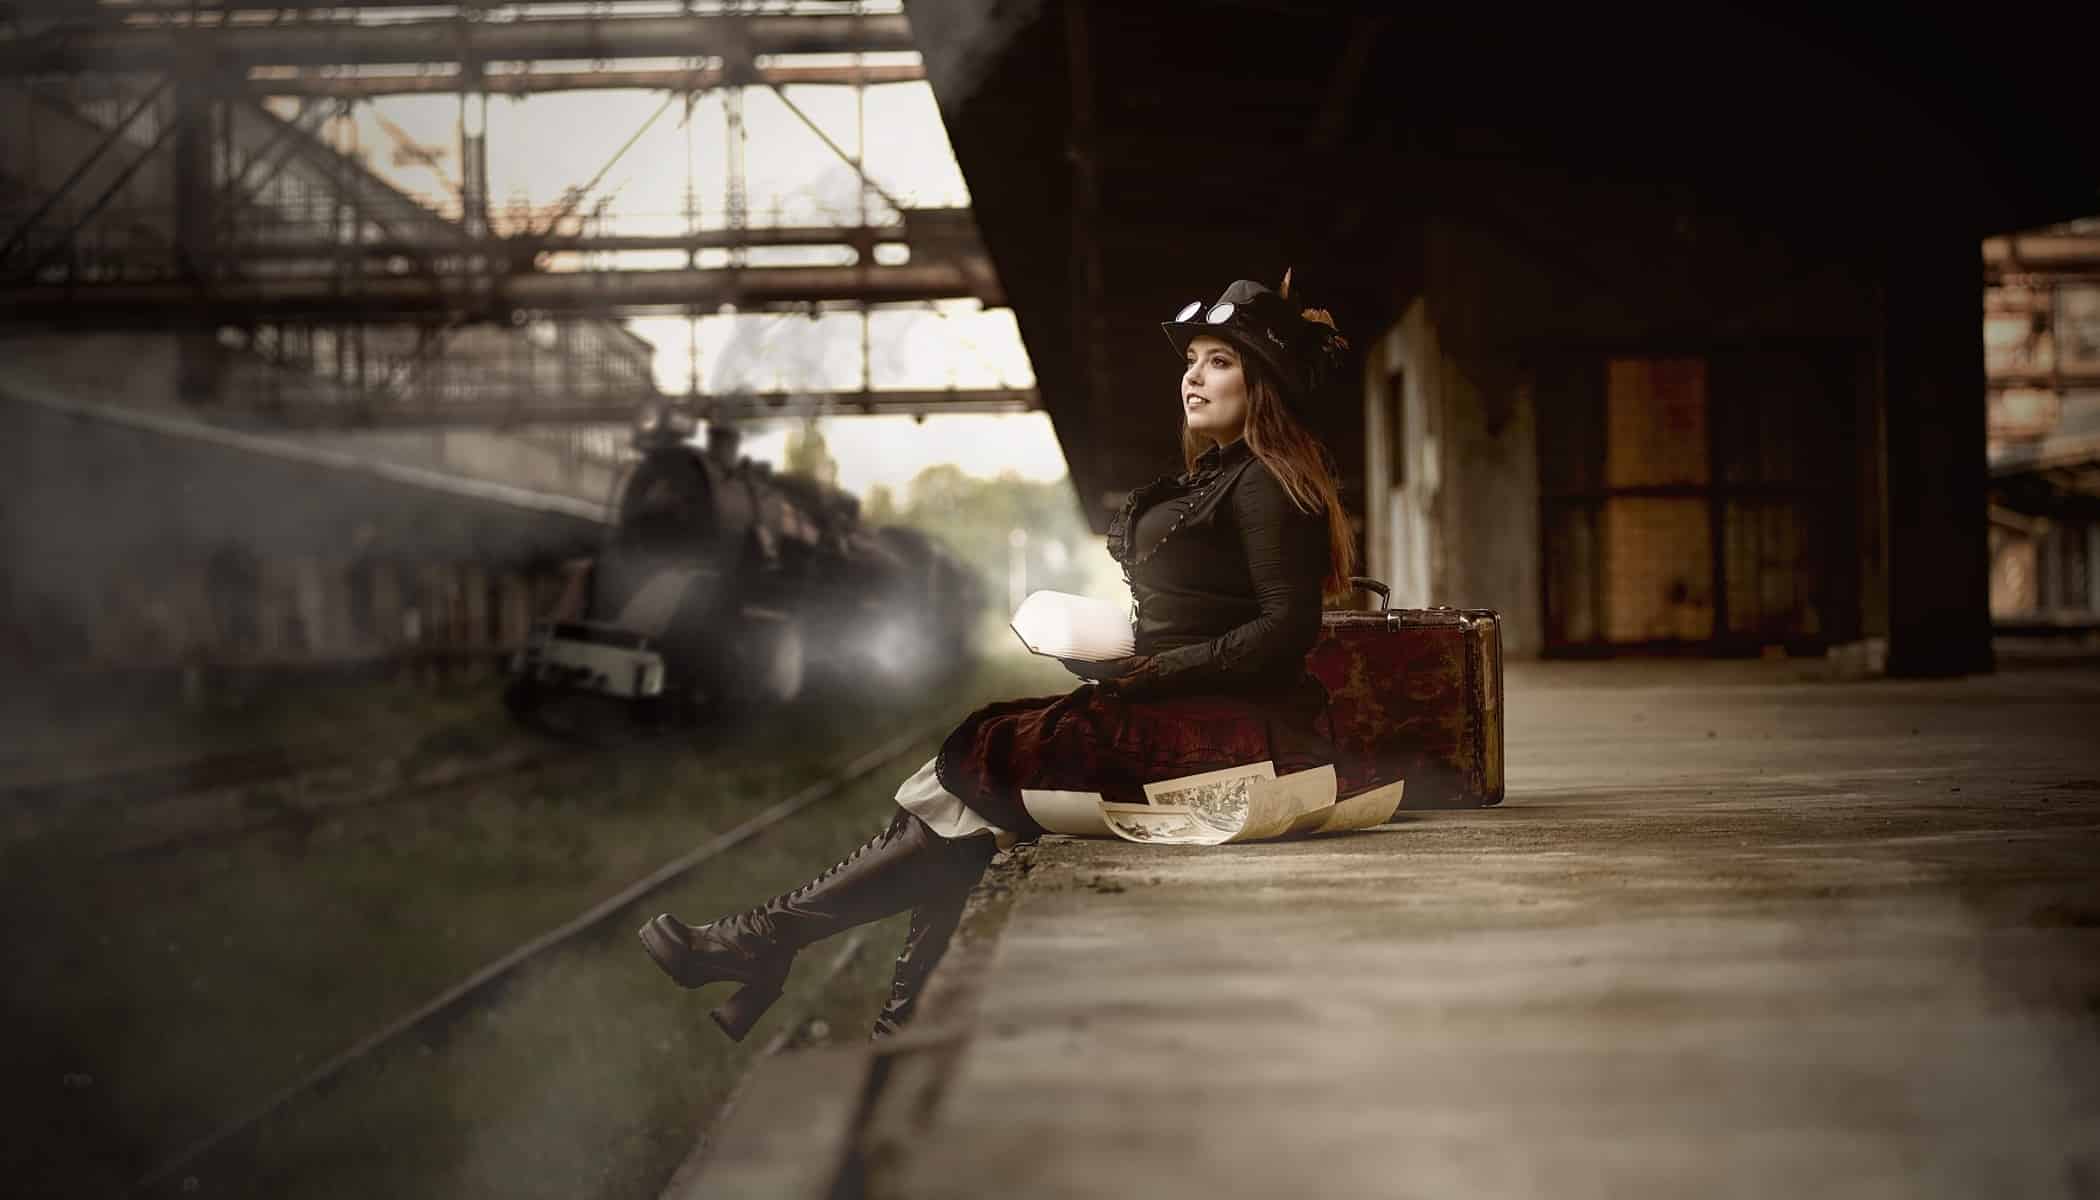 Photo Editing Tutorial: Abandoned Train Station Photo Montage